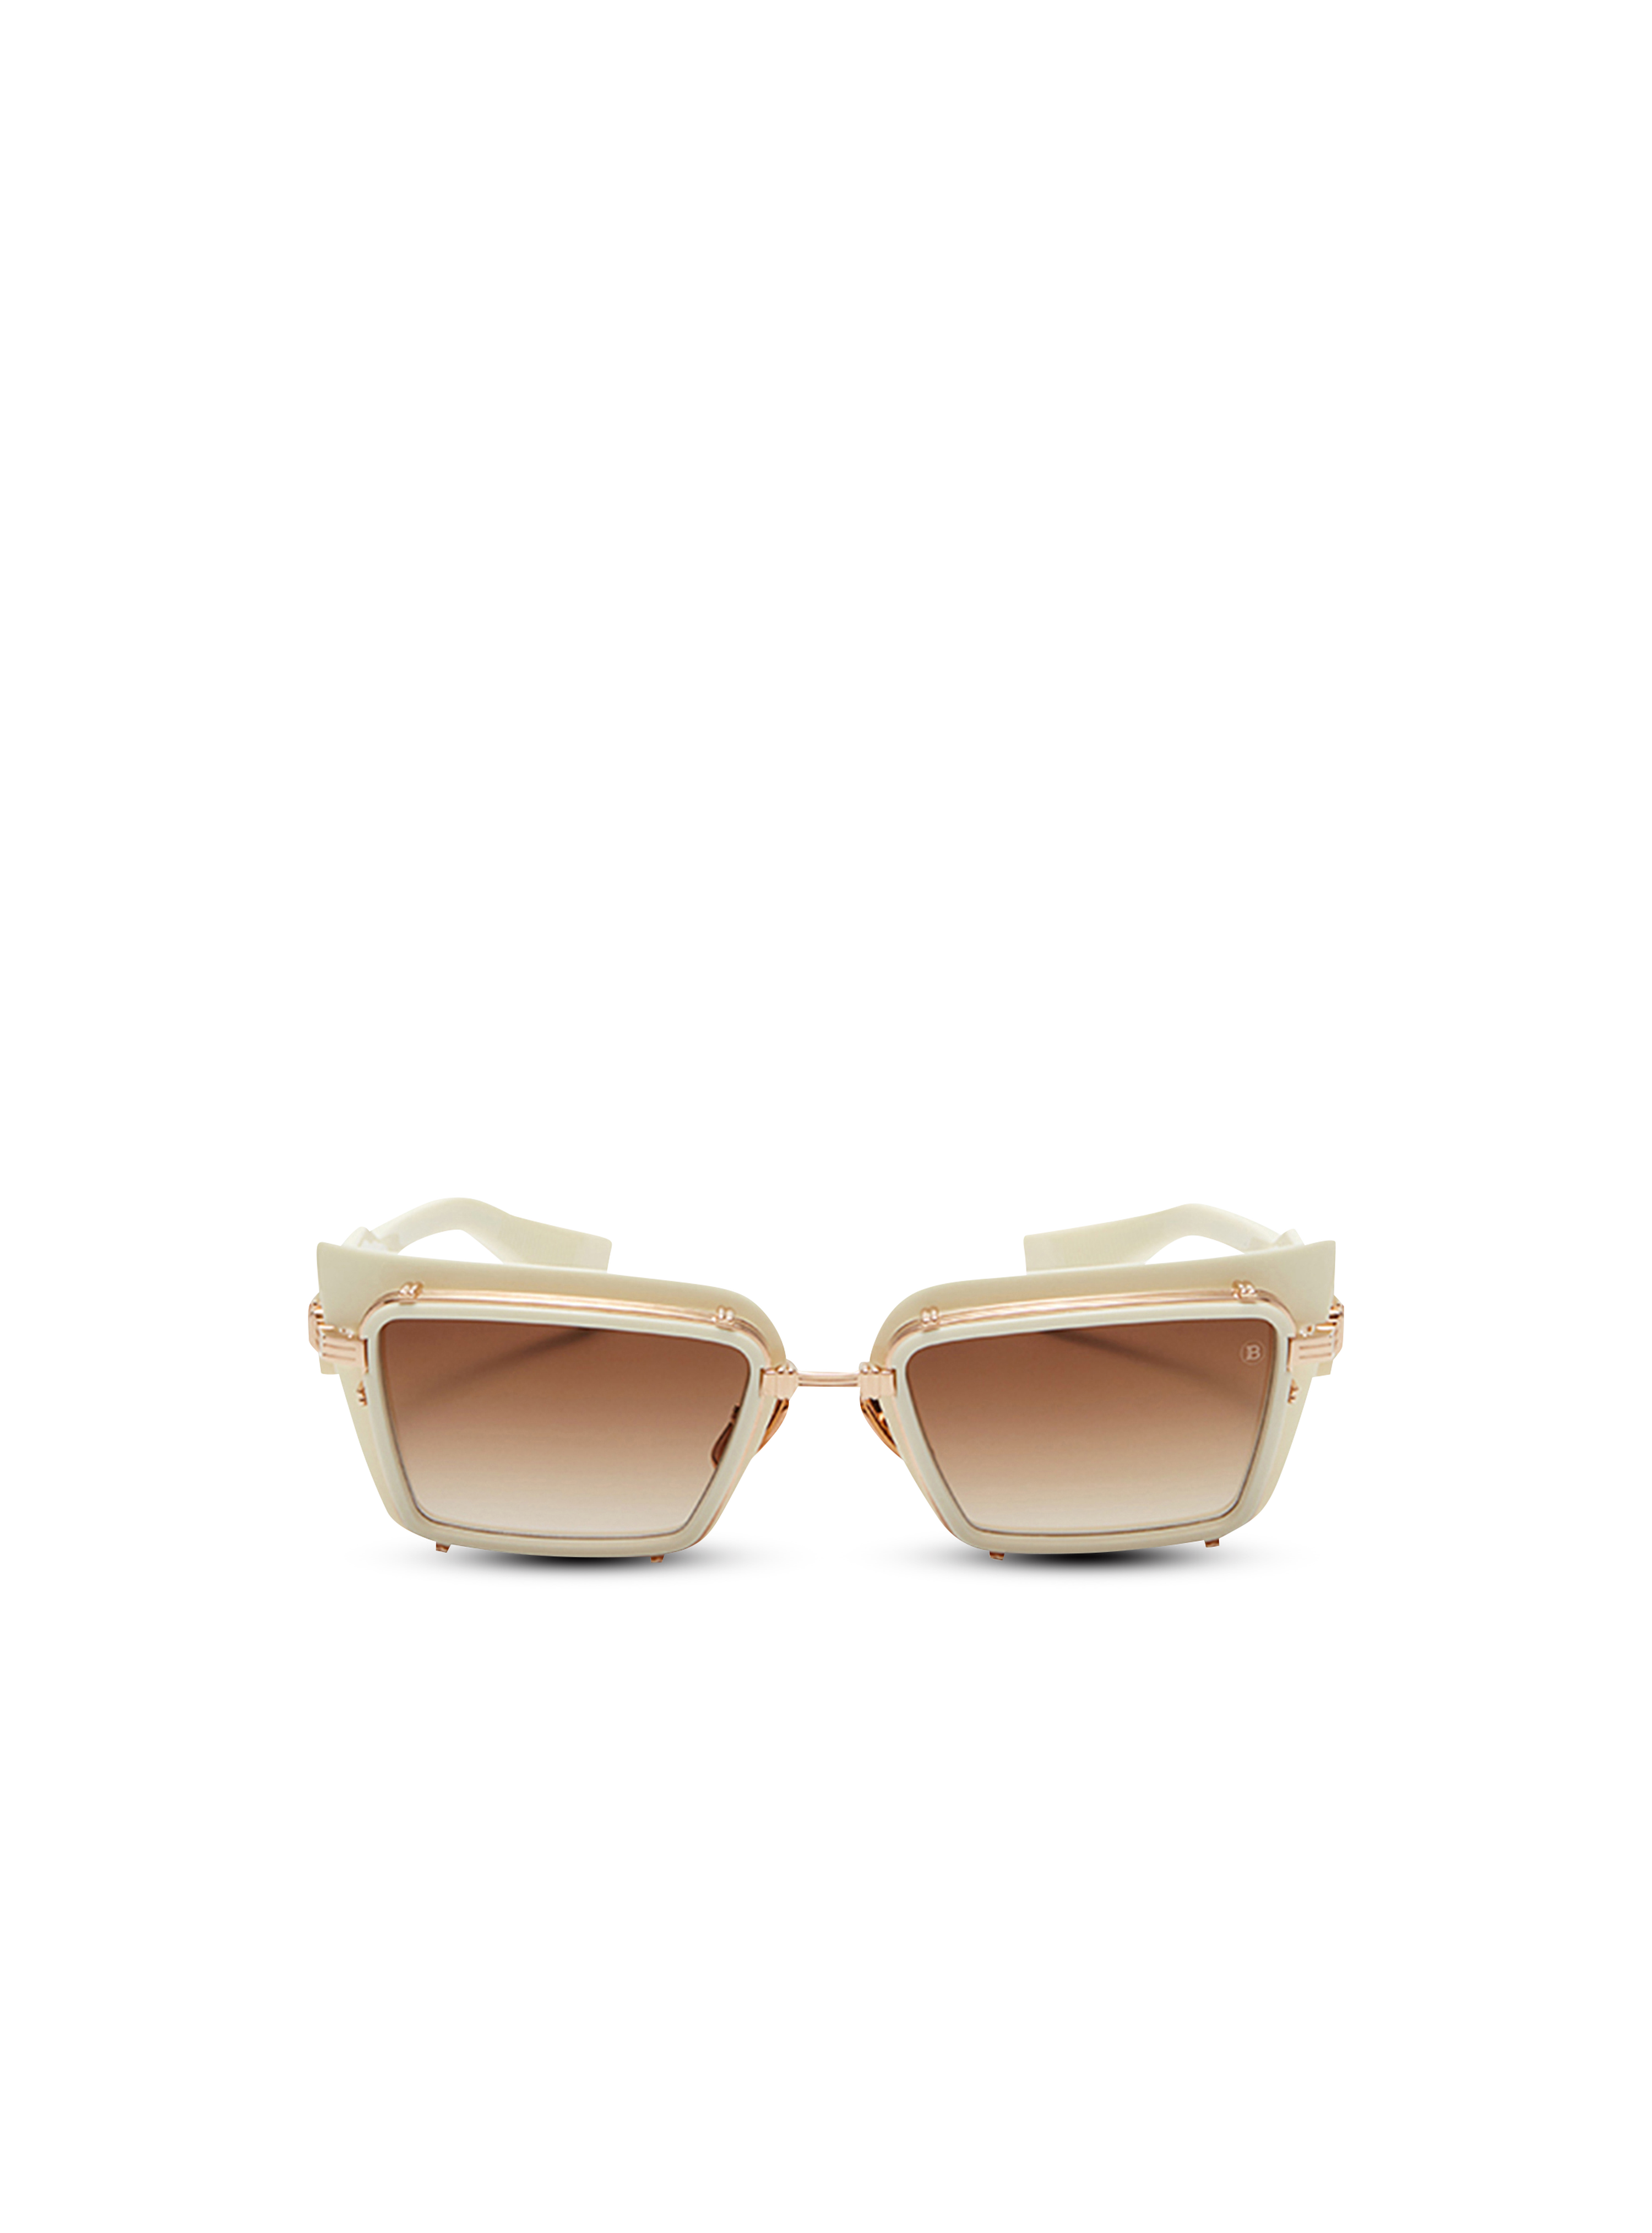 Admirable sunglasses, white